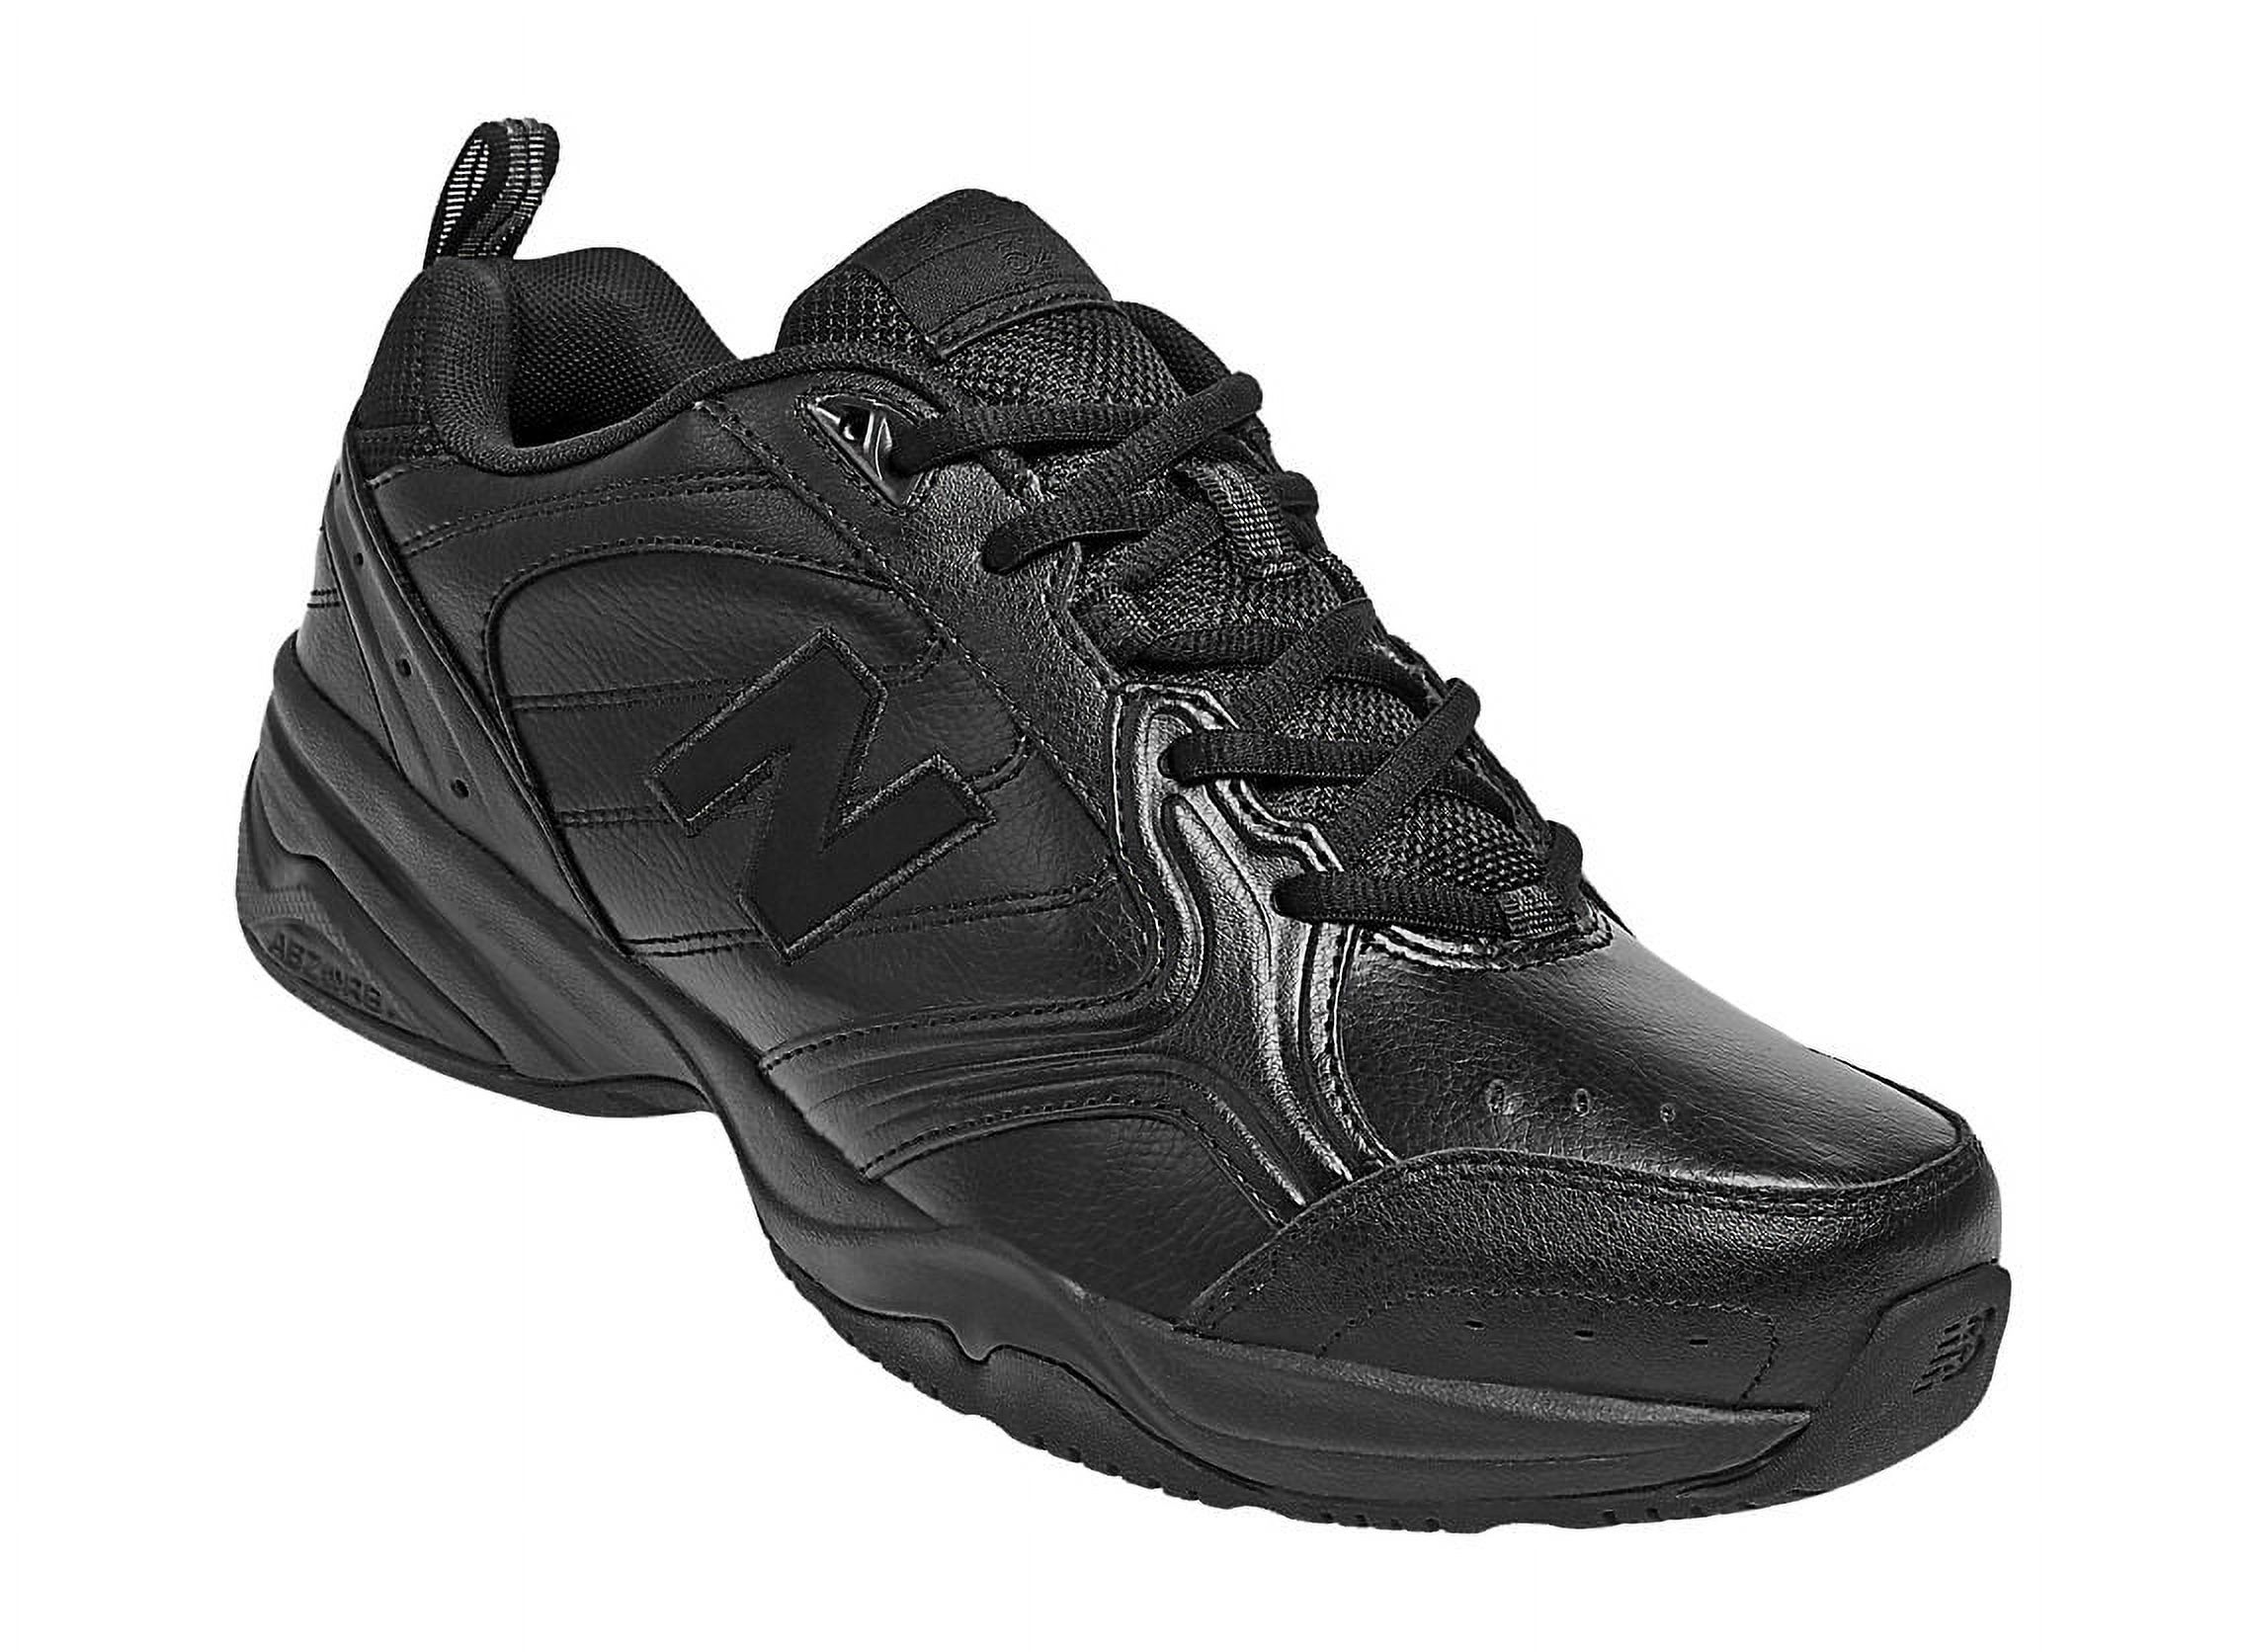 new balance men's mx624v2 casual comfort training shoe, black, 10.5 4e us - image 1 of 5